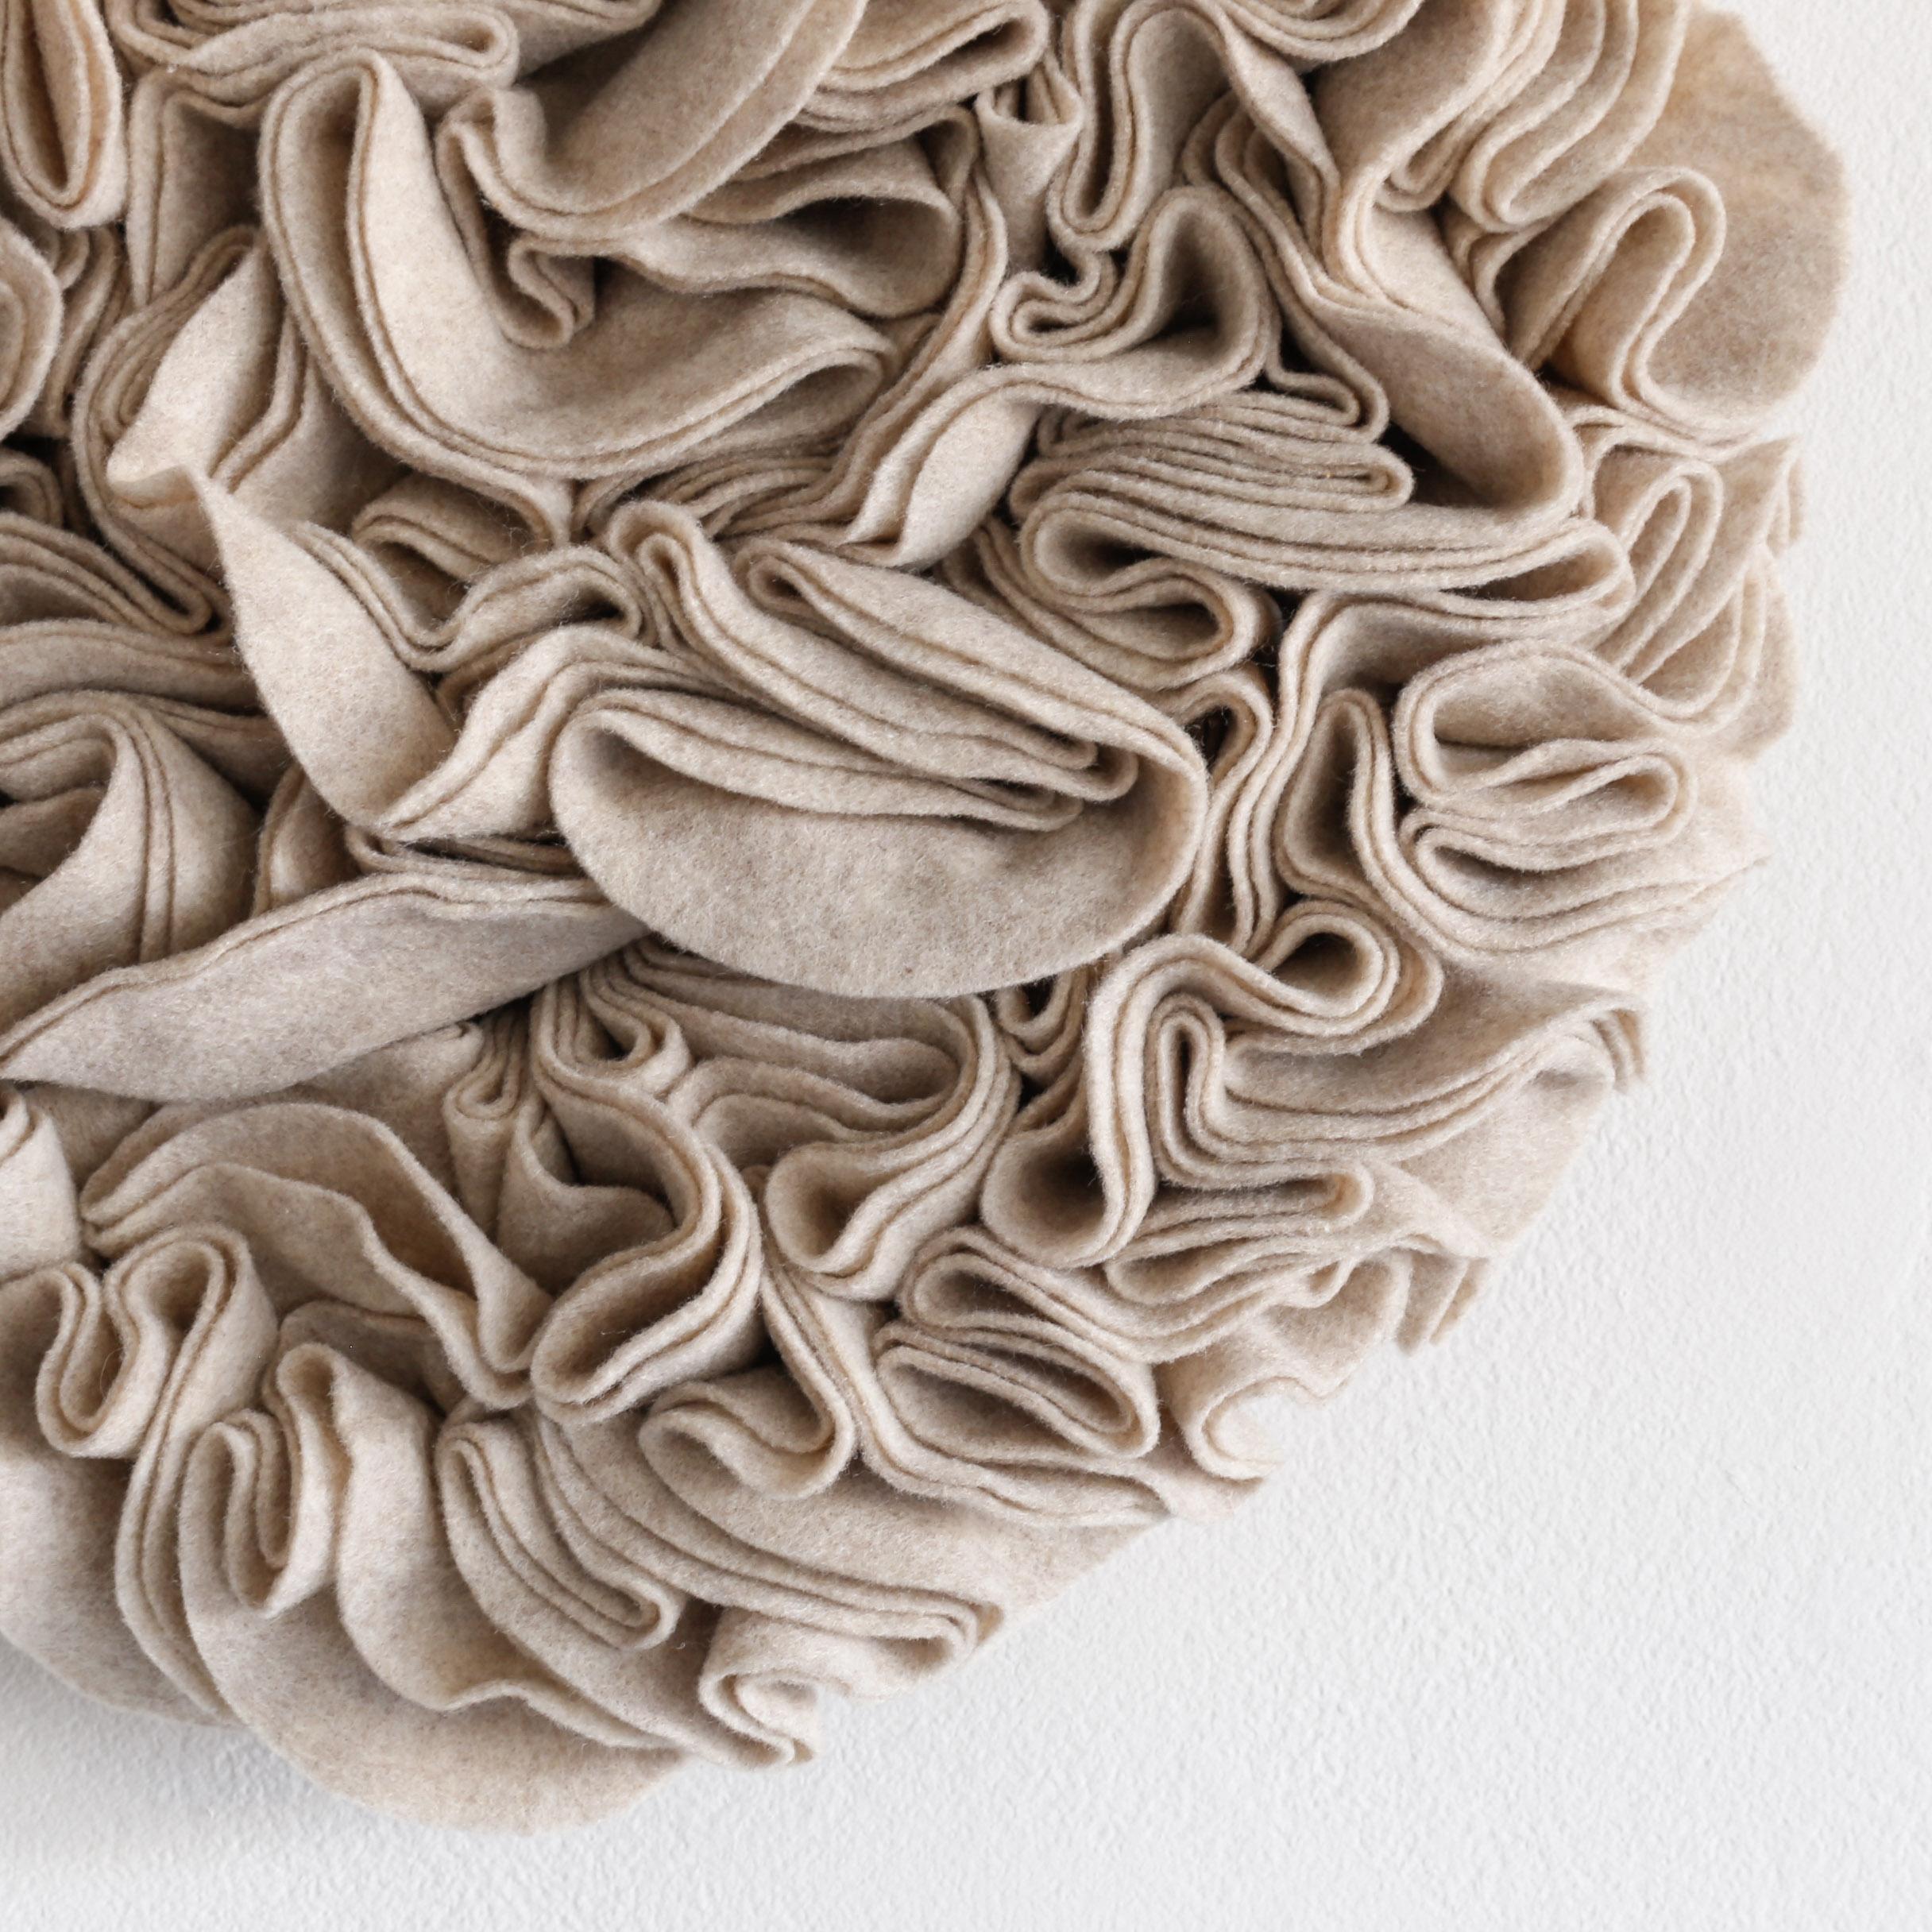 SUSANNAH MIRA
Ripple Effect In Sandstone
• yarn, cotton, fabric
15.50w x 15.50h x 4.00d in
$560.00